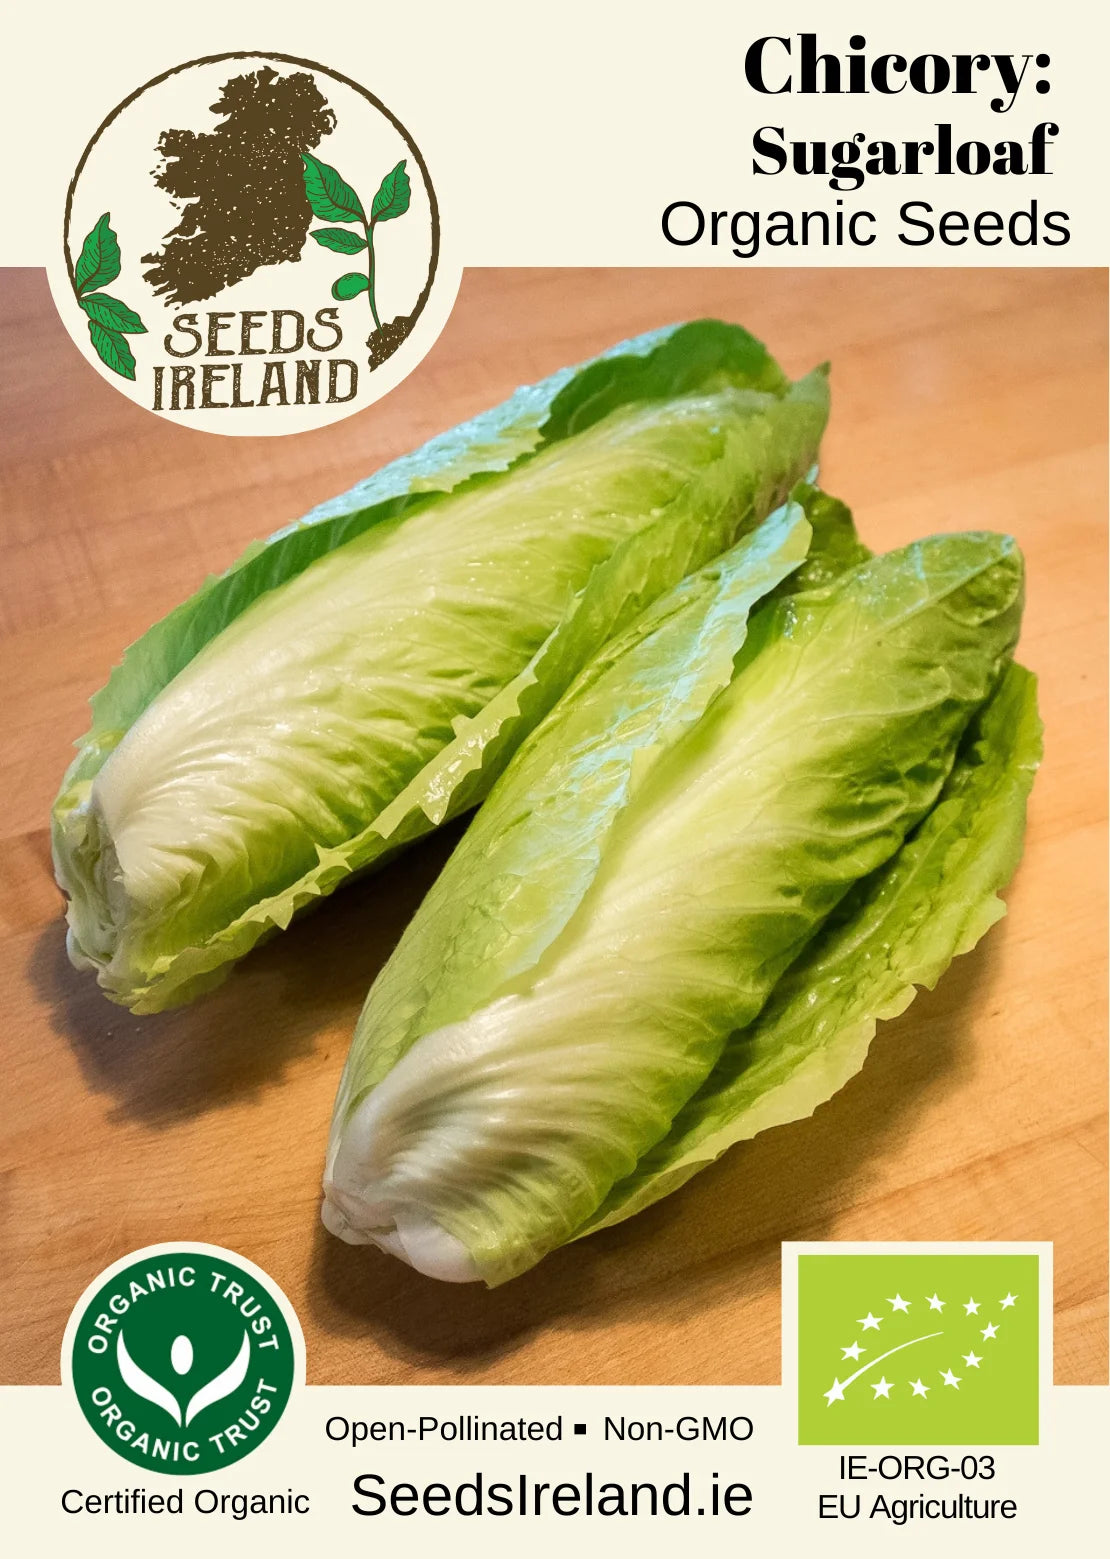 Chicory: Sugarloaf Organic Seed